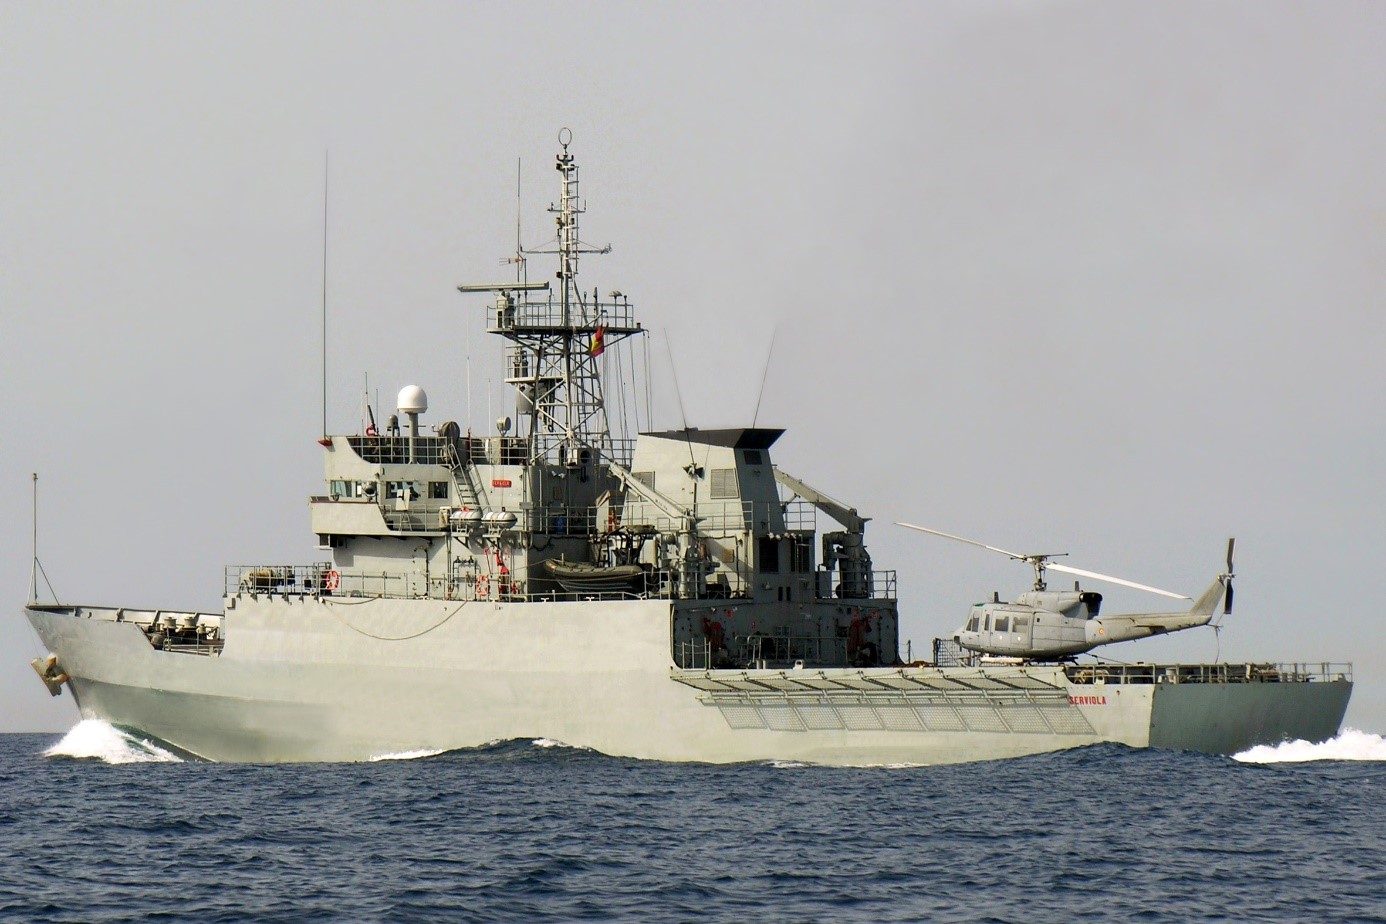 Offshore Patrol vessel 'Serviola'